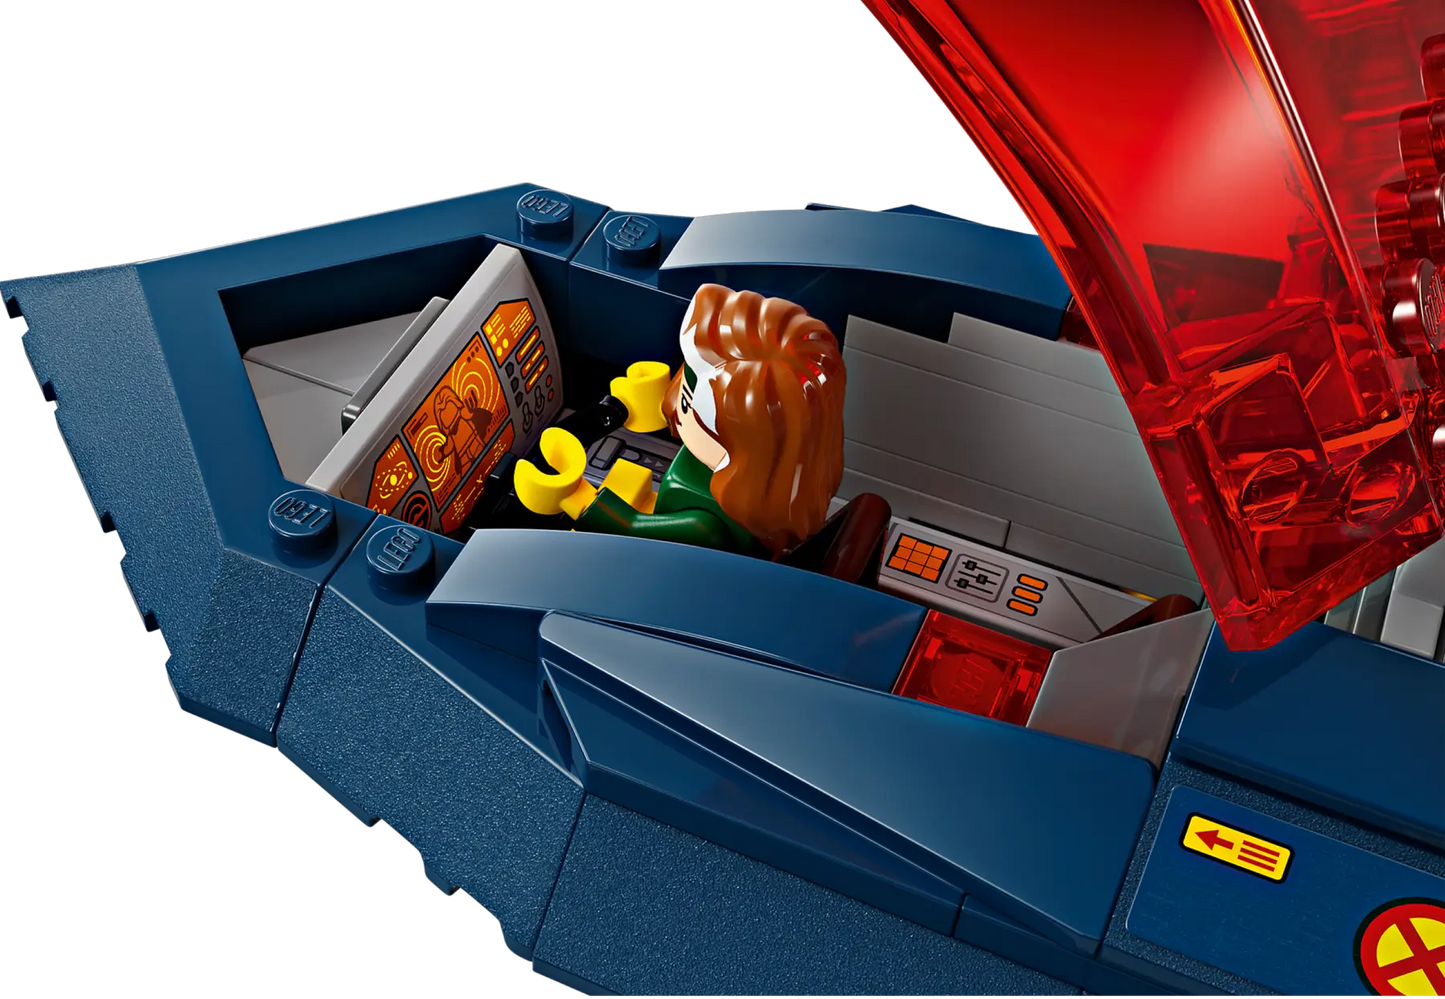 LEGO - MARVEL - X-Men X-Jet - 76281